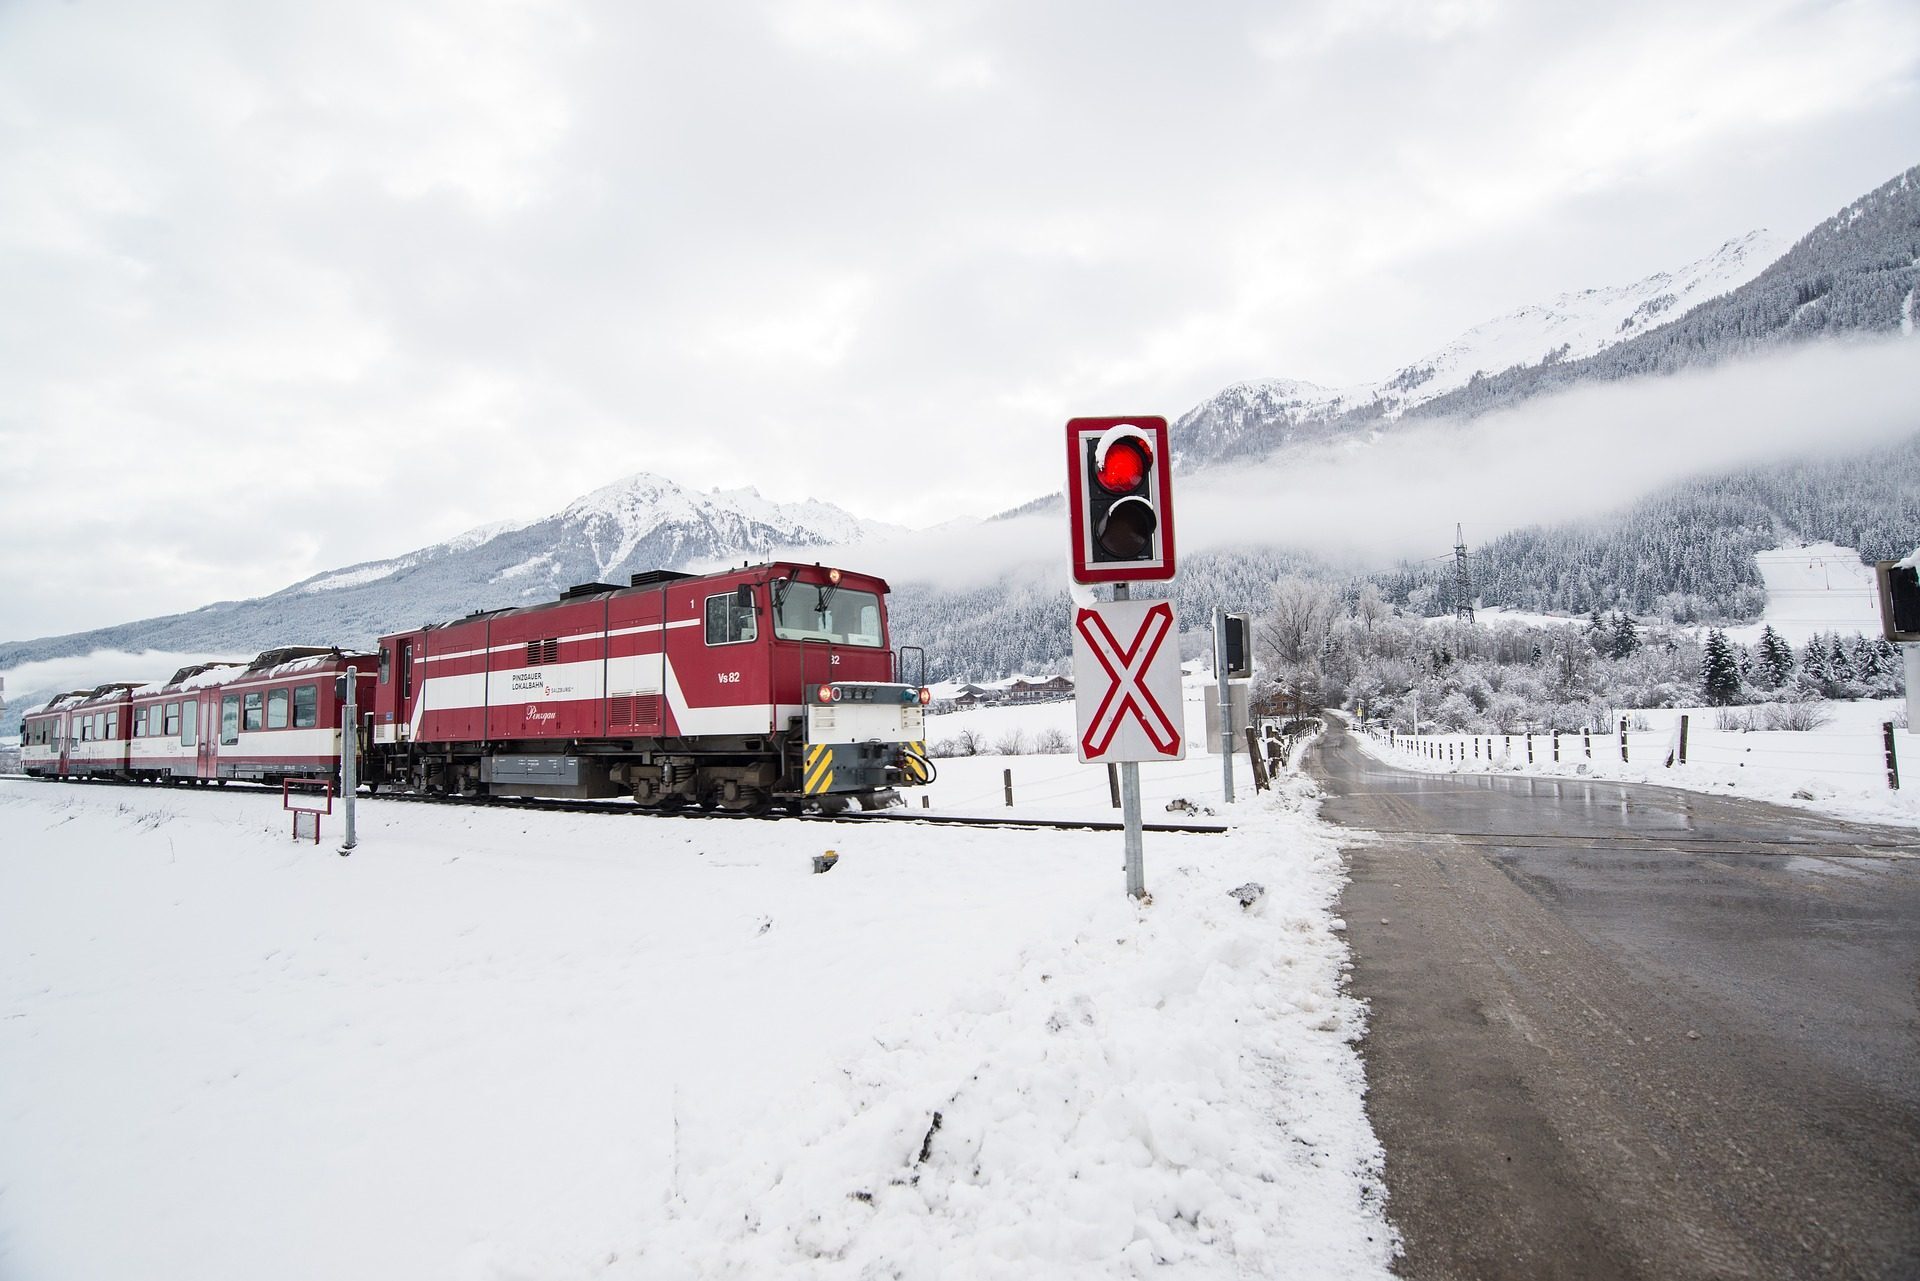 tren-ferrocarril-semaforo-cruce-nieve-montanas-Fondos-de-Pantalla-HD-professor-falken.com_